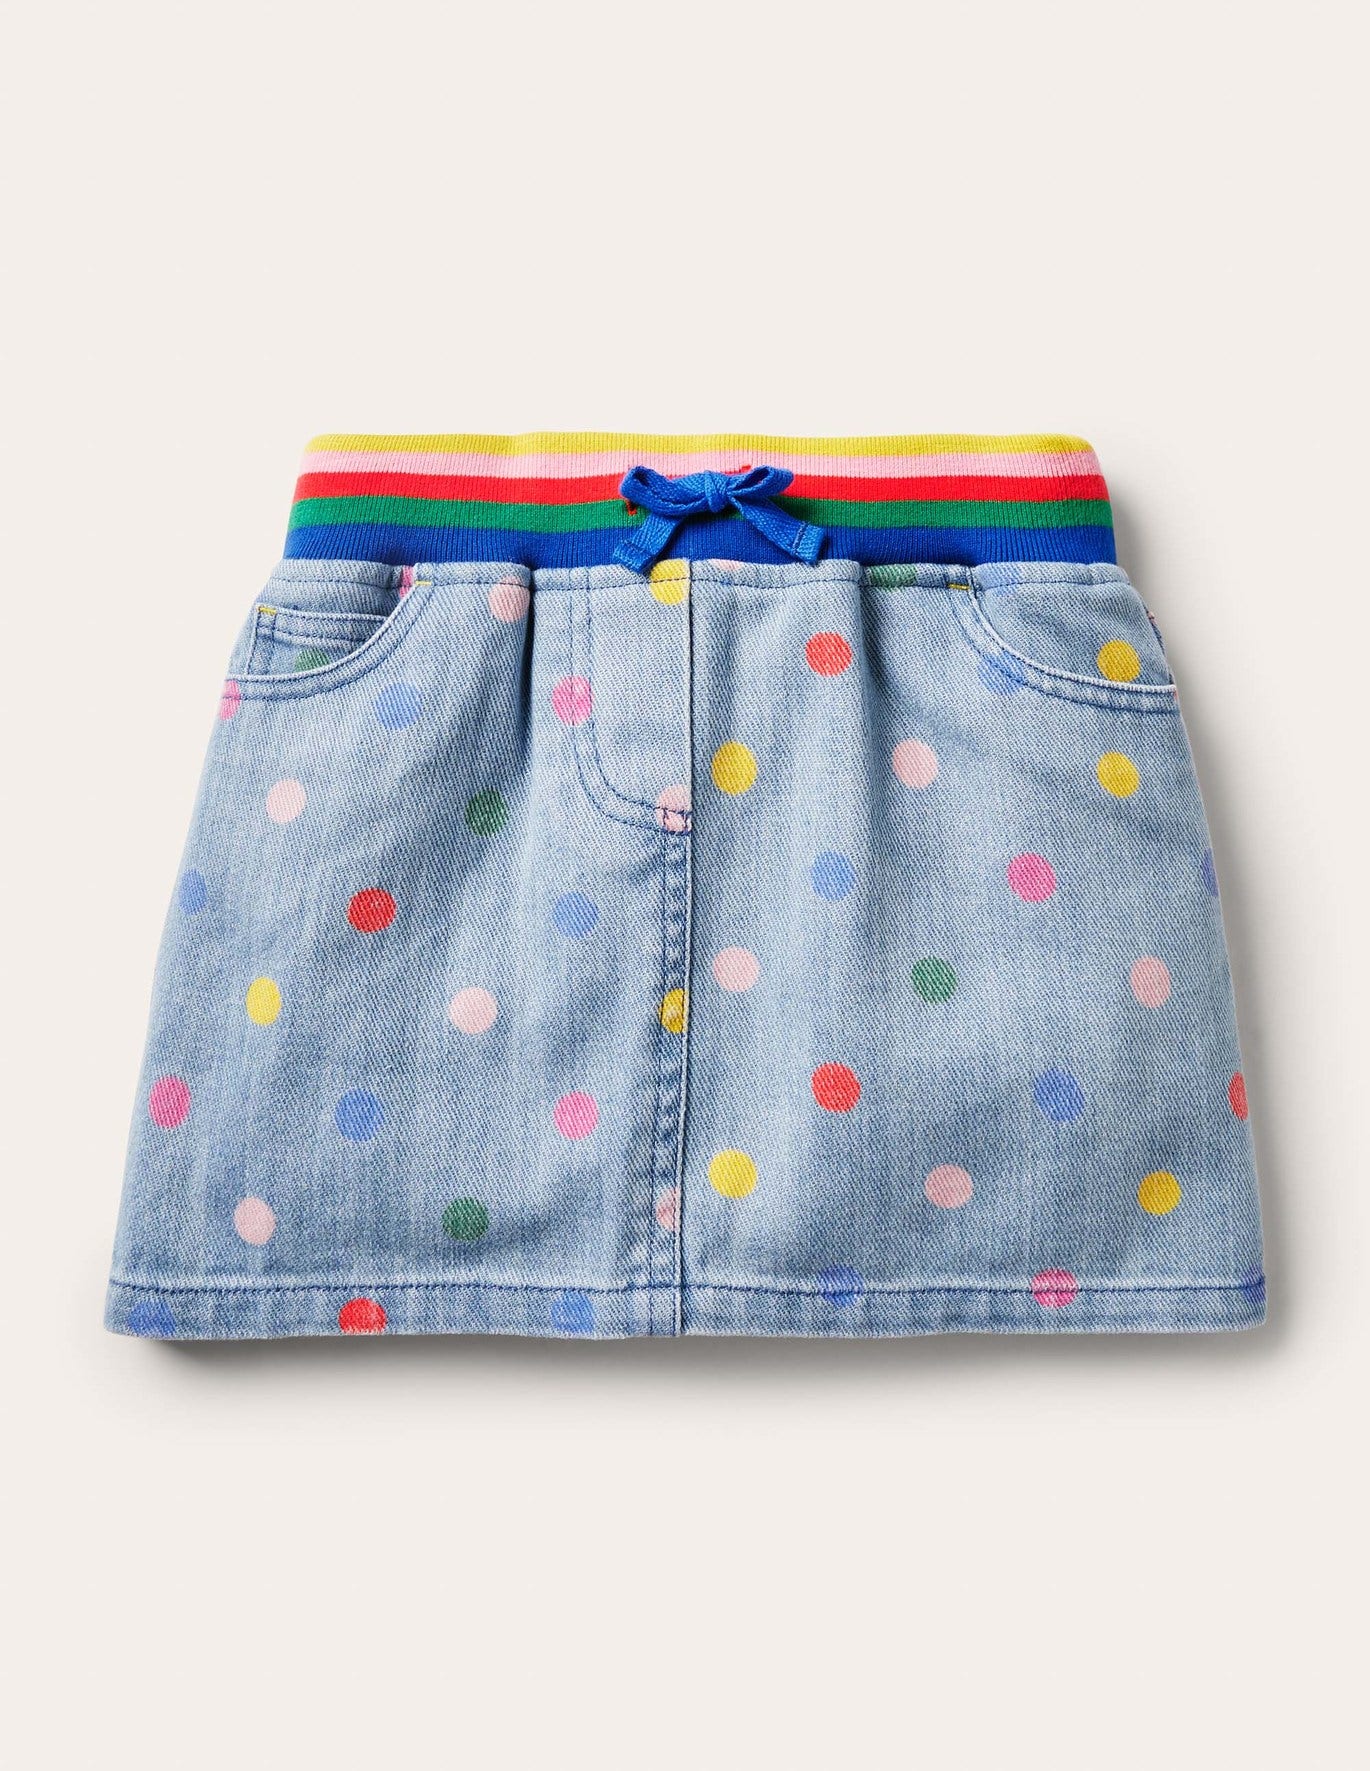 Boden Rainbow Rib Denim Skirt - Chambray Multi Spot